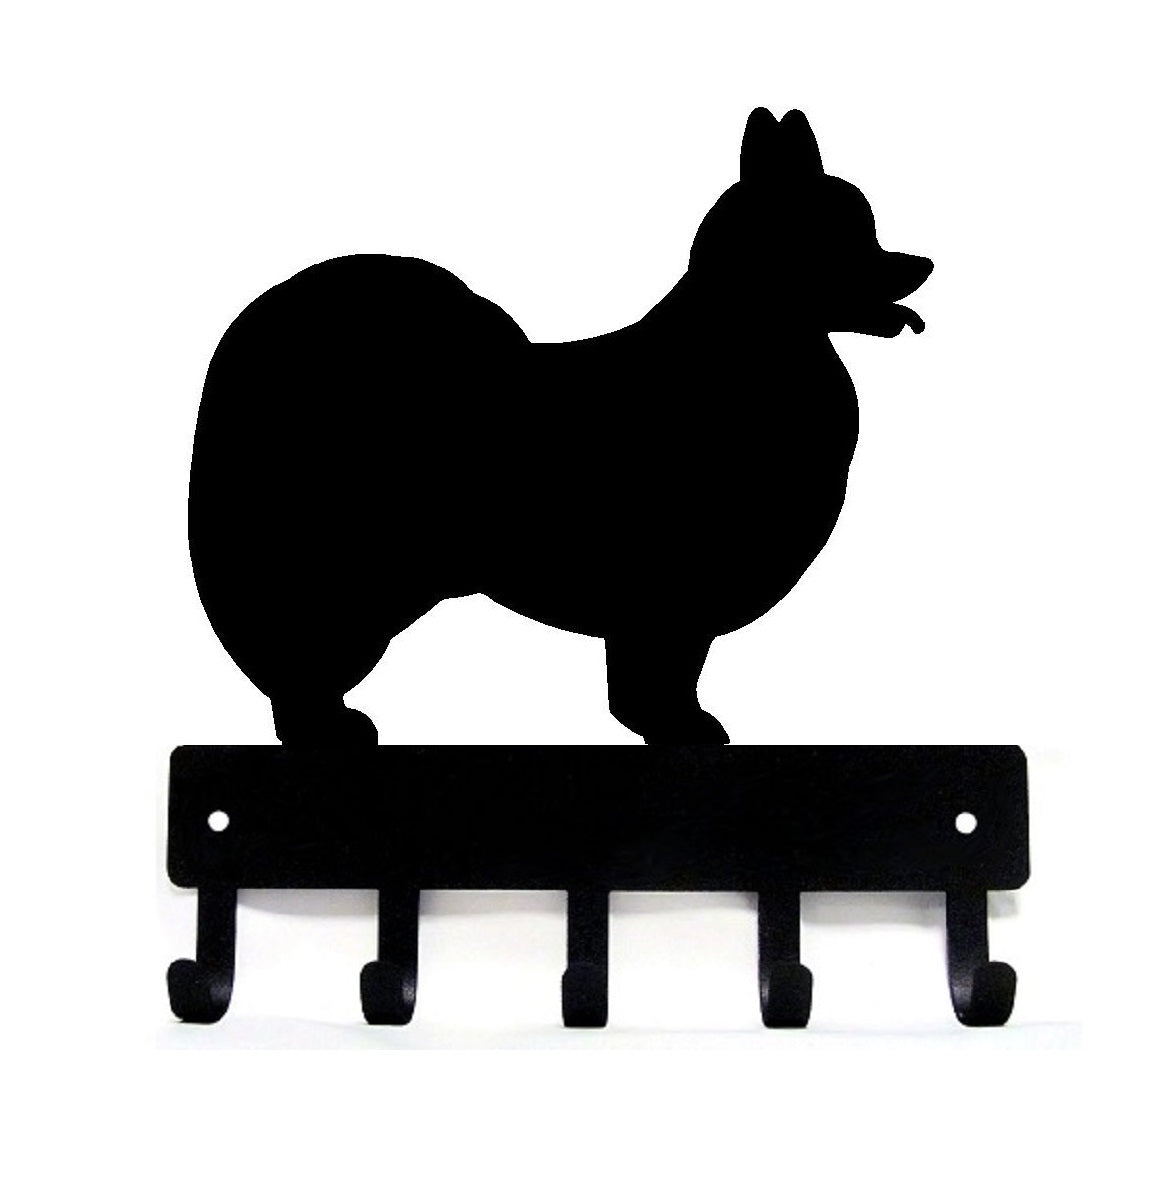 Papillon Dog Key Rack/ Leash Hanger - The Metal Peddler Key Rack breed, Breed P, Dog, key rack, leash hanger, Papillon